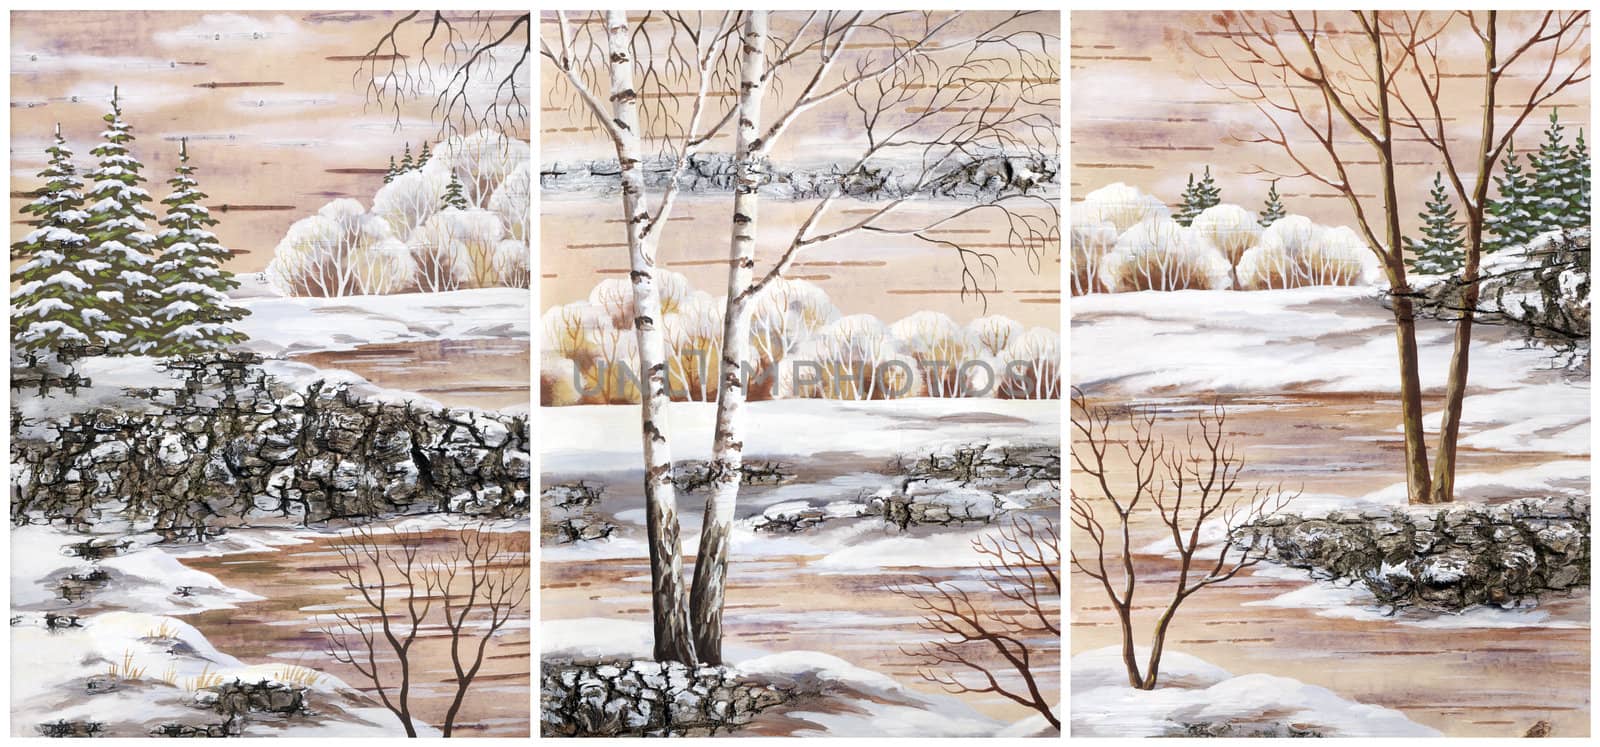 Landscapes, distemper on a bark by alexcoolok